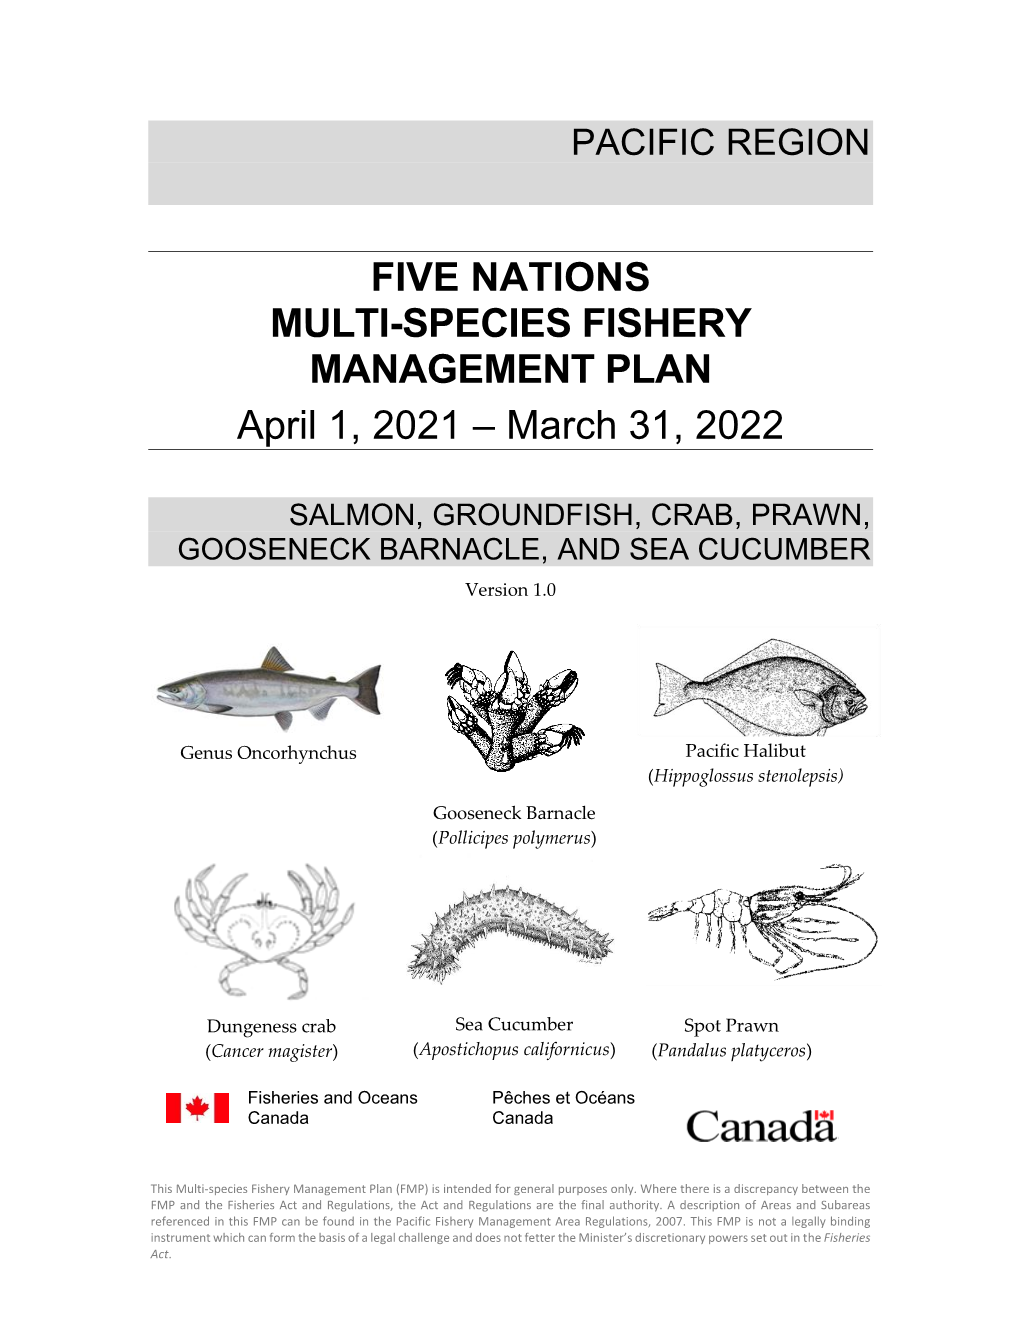 Five Nations Multi-Species Fishery Management Plan, April 1, 2021